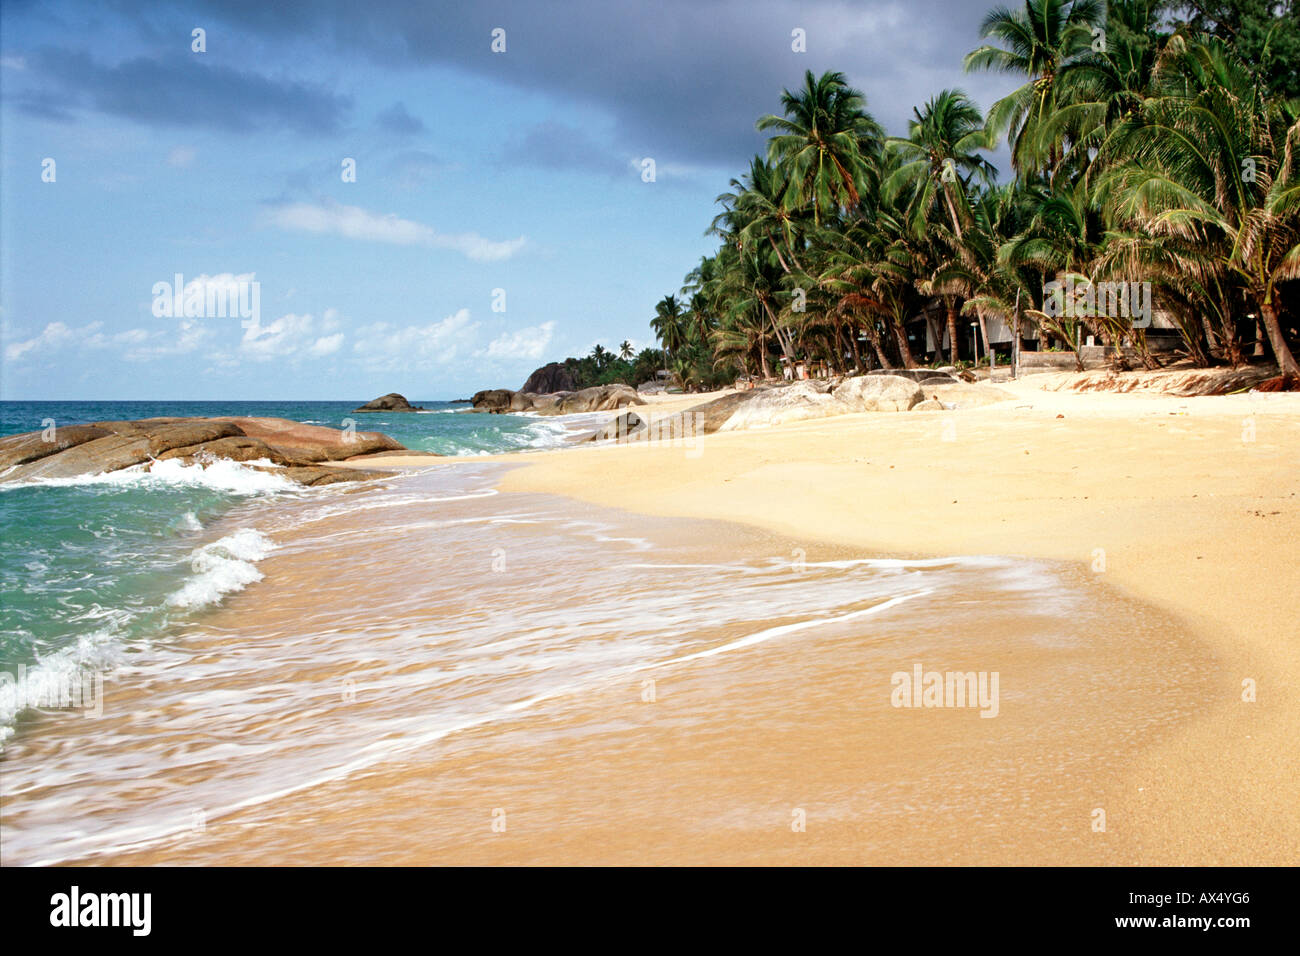 Hat Lamai beach on the island of Koh Samui in Thailand Stock Photo - Alamy